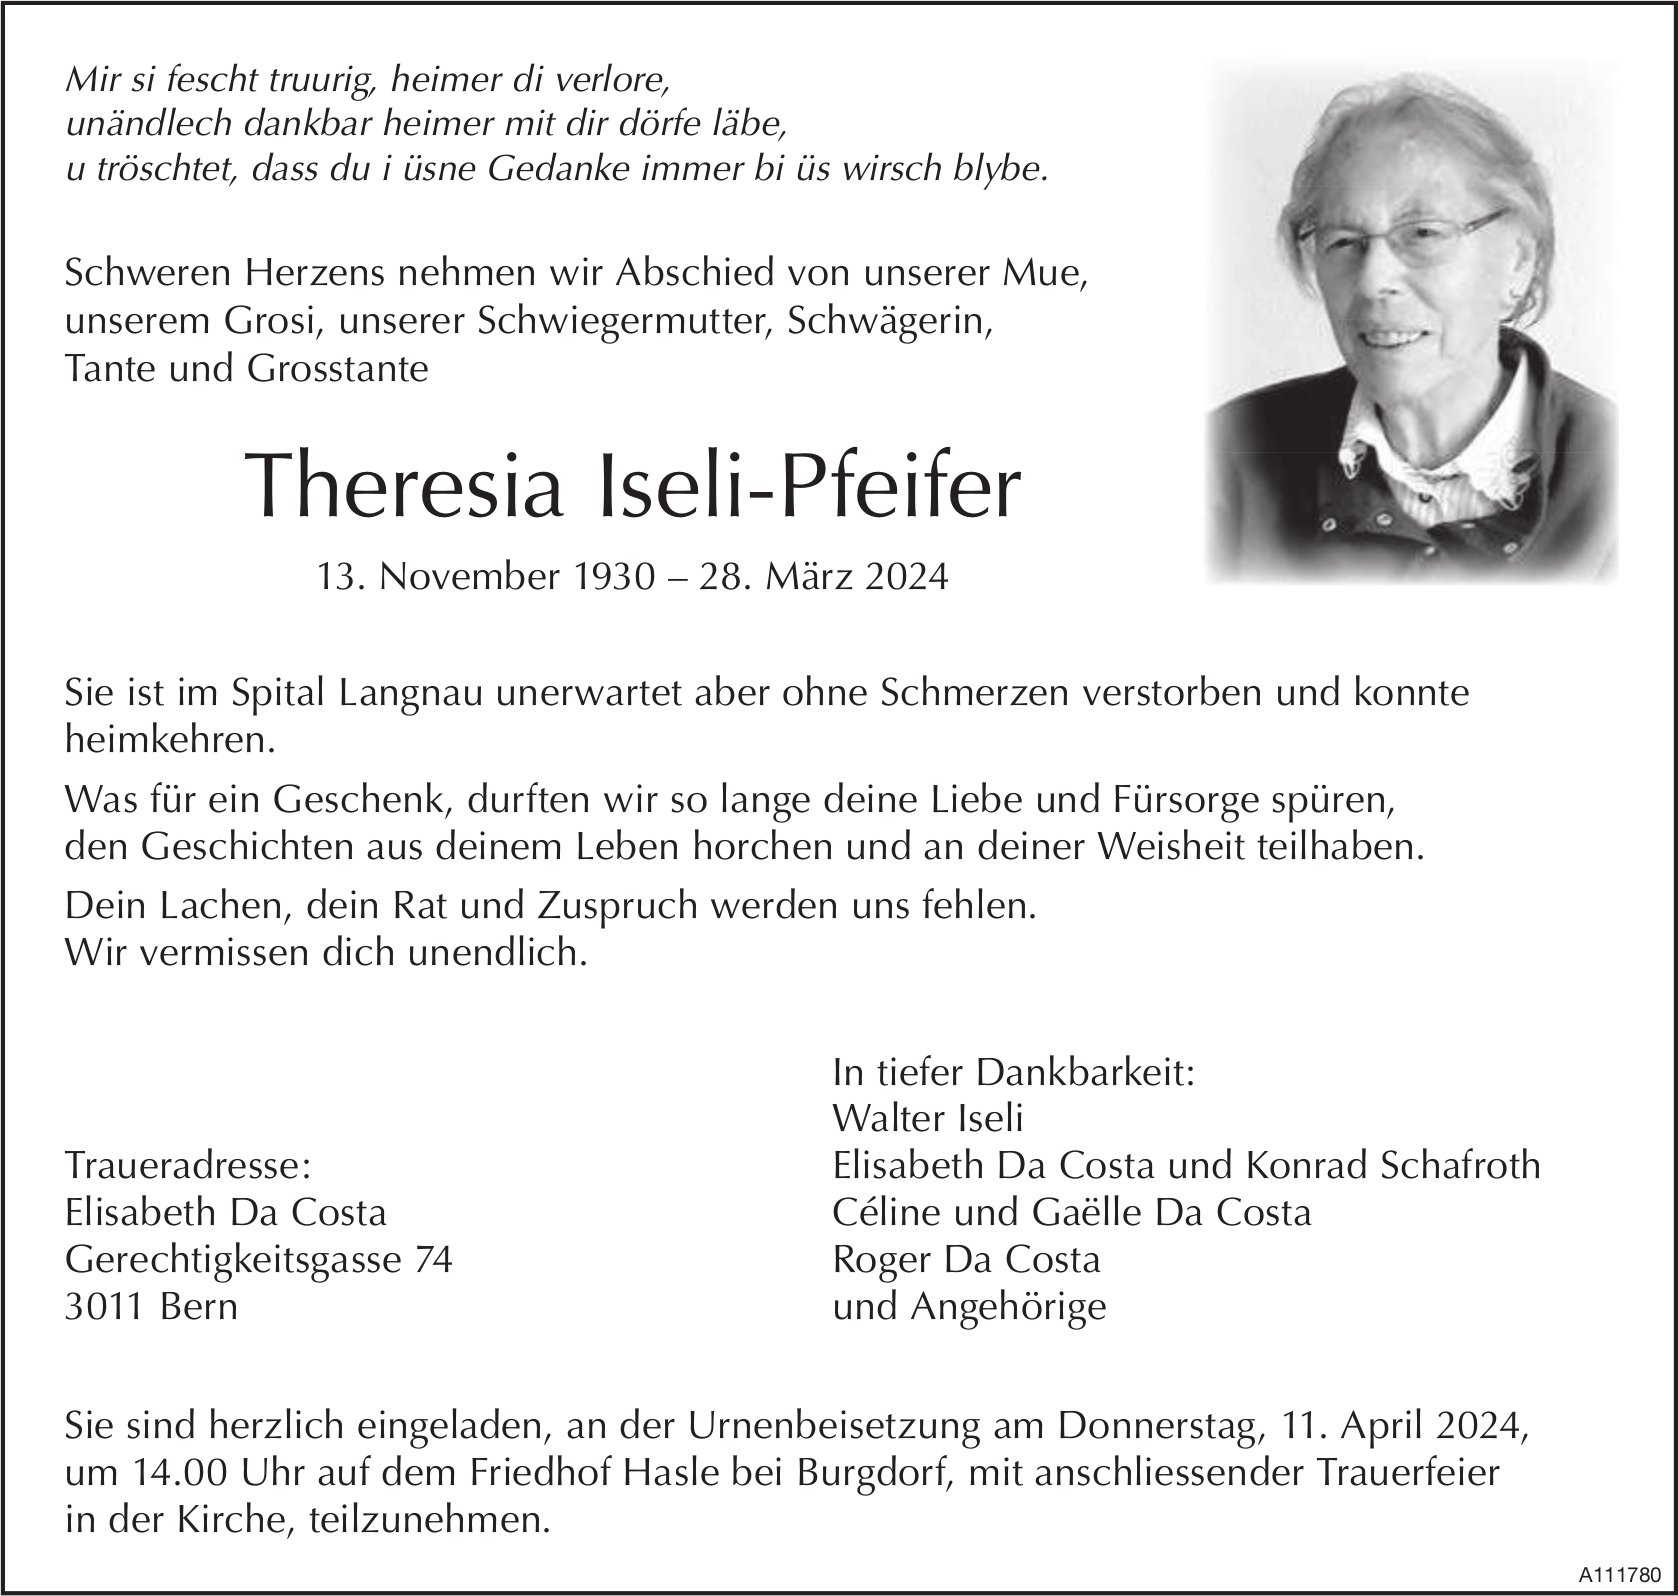 Theresia Iseli-Pfeifer, März 2024 / TA